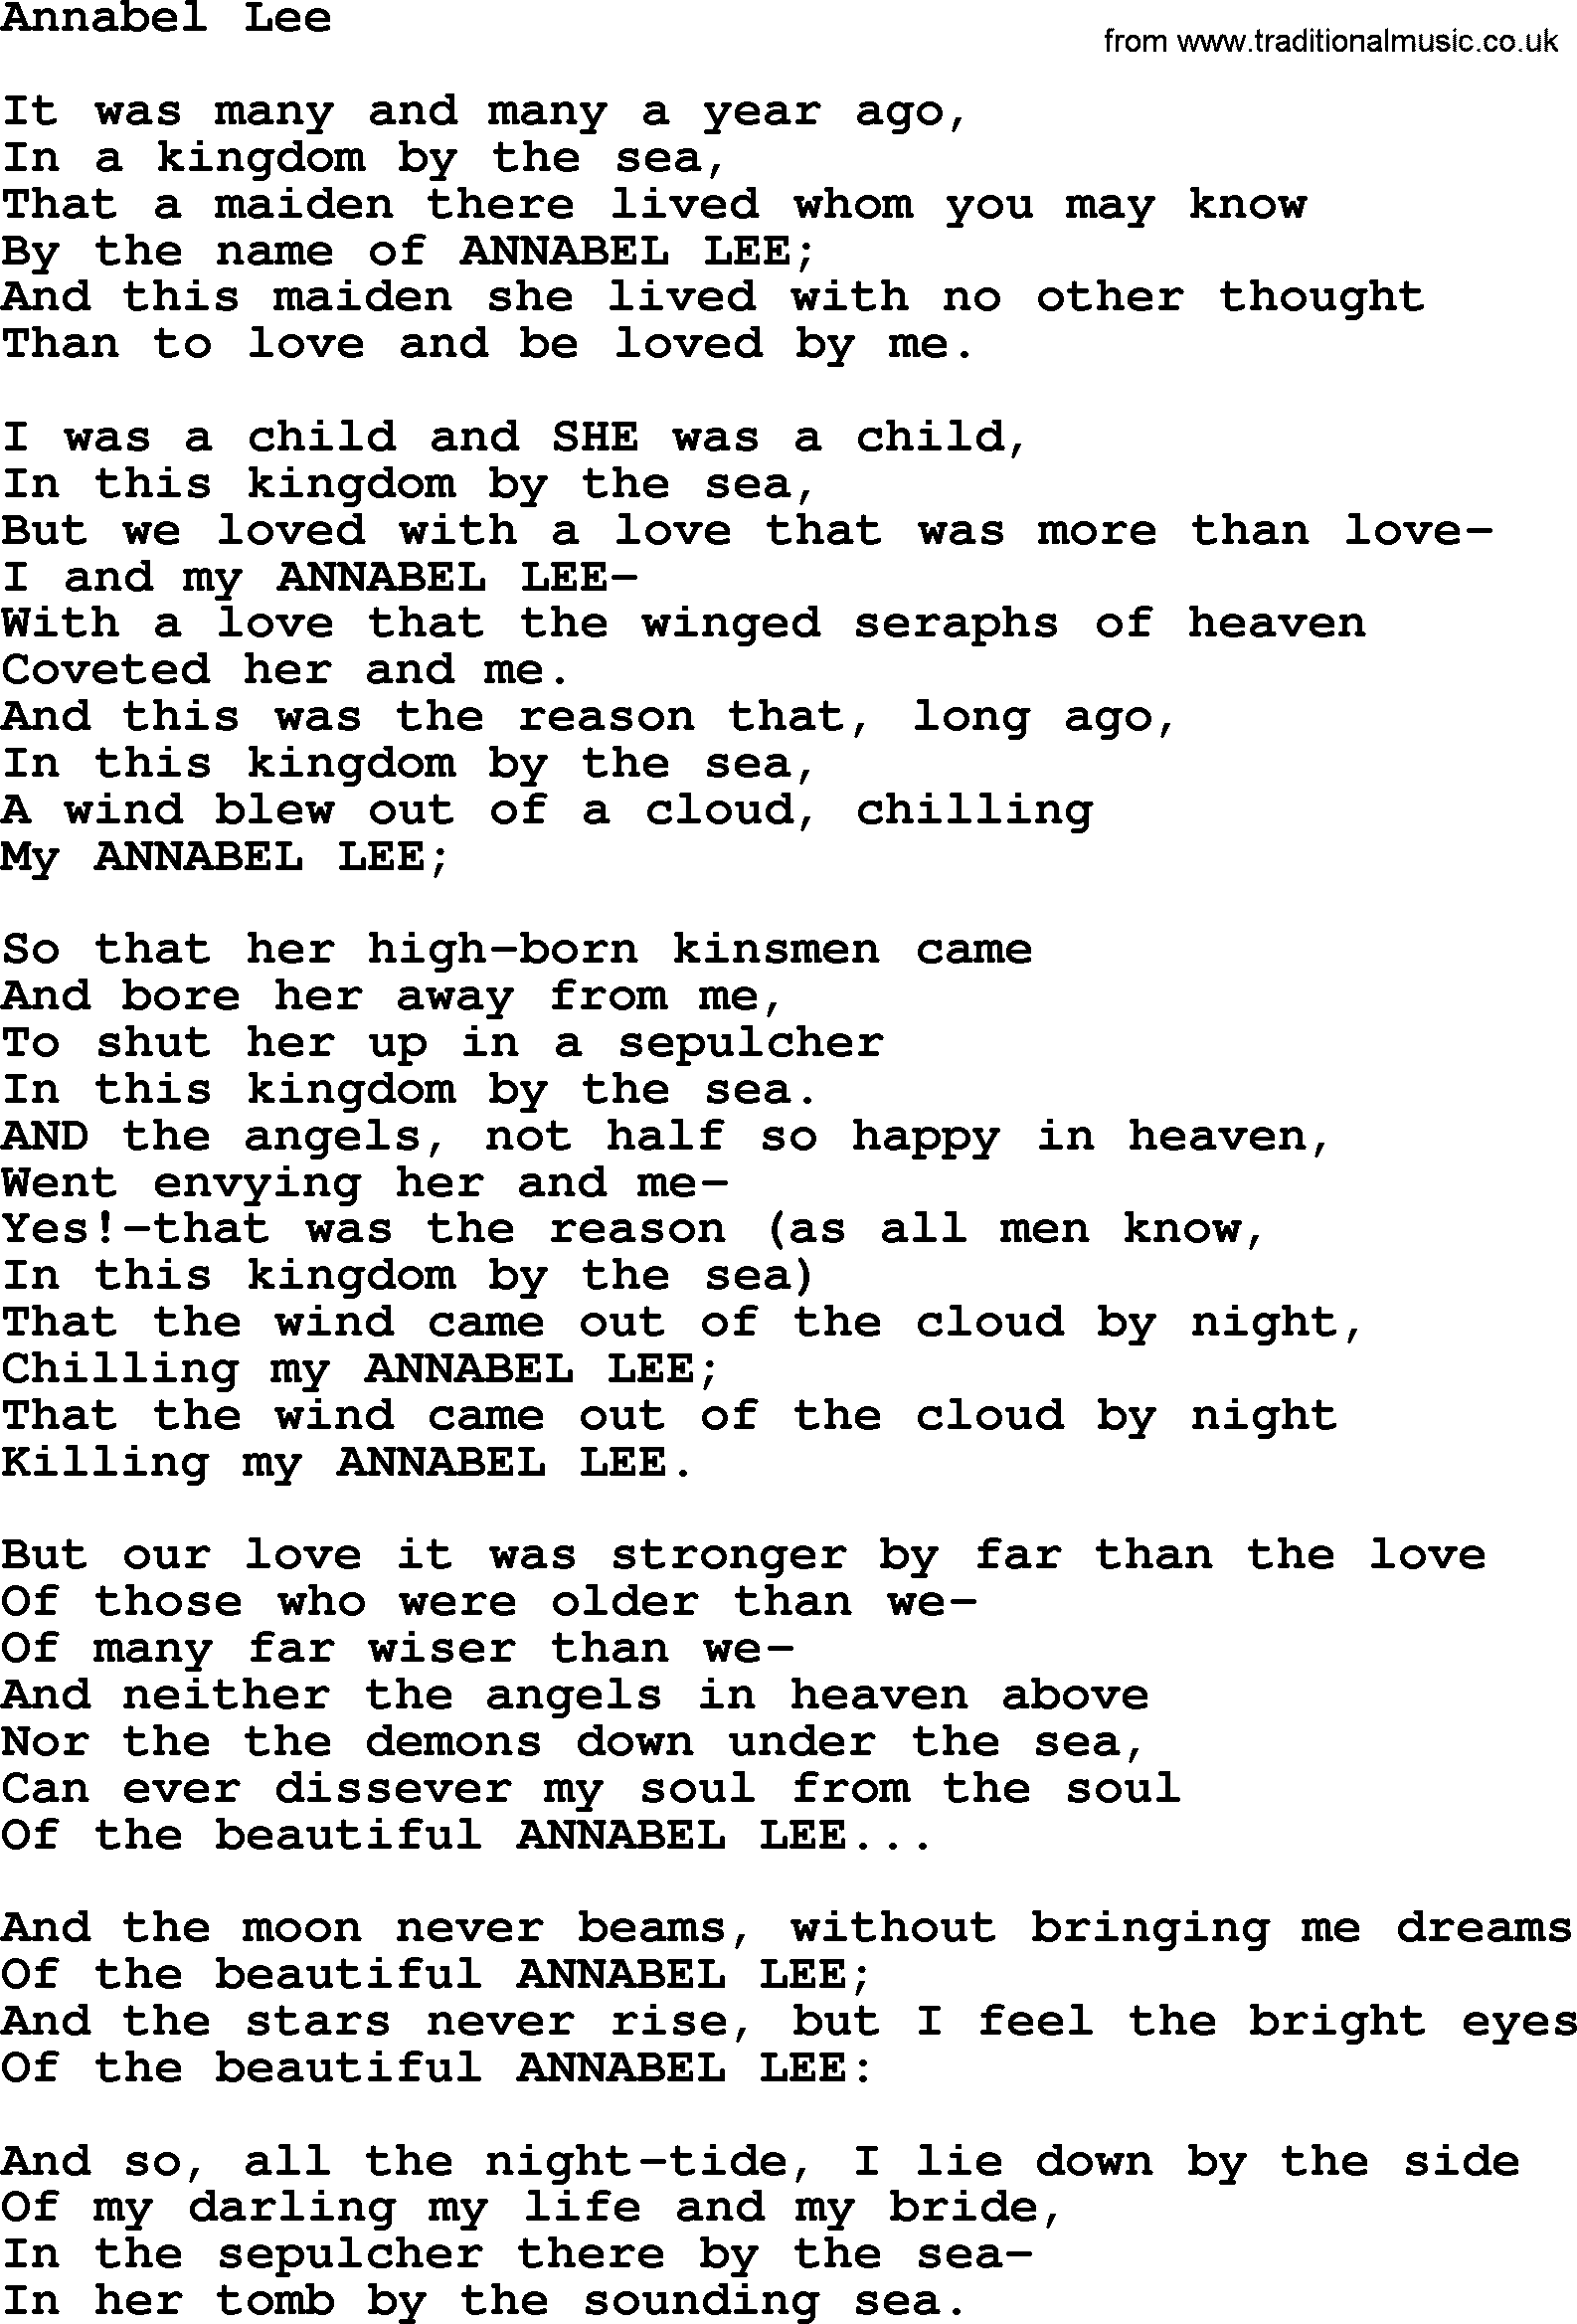 Joan Baez song Annabel Lee, lyrics